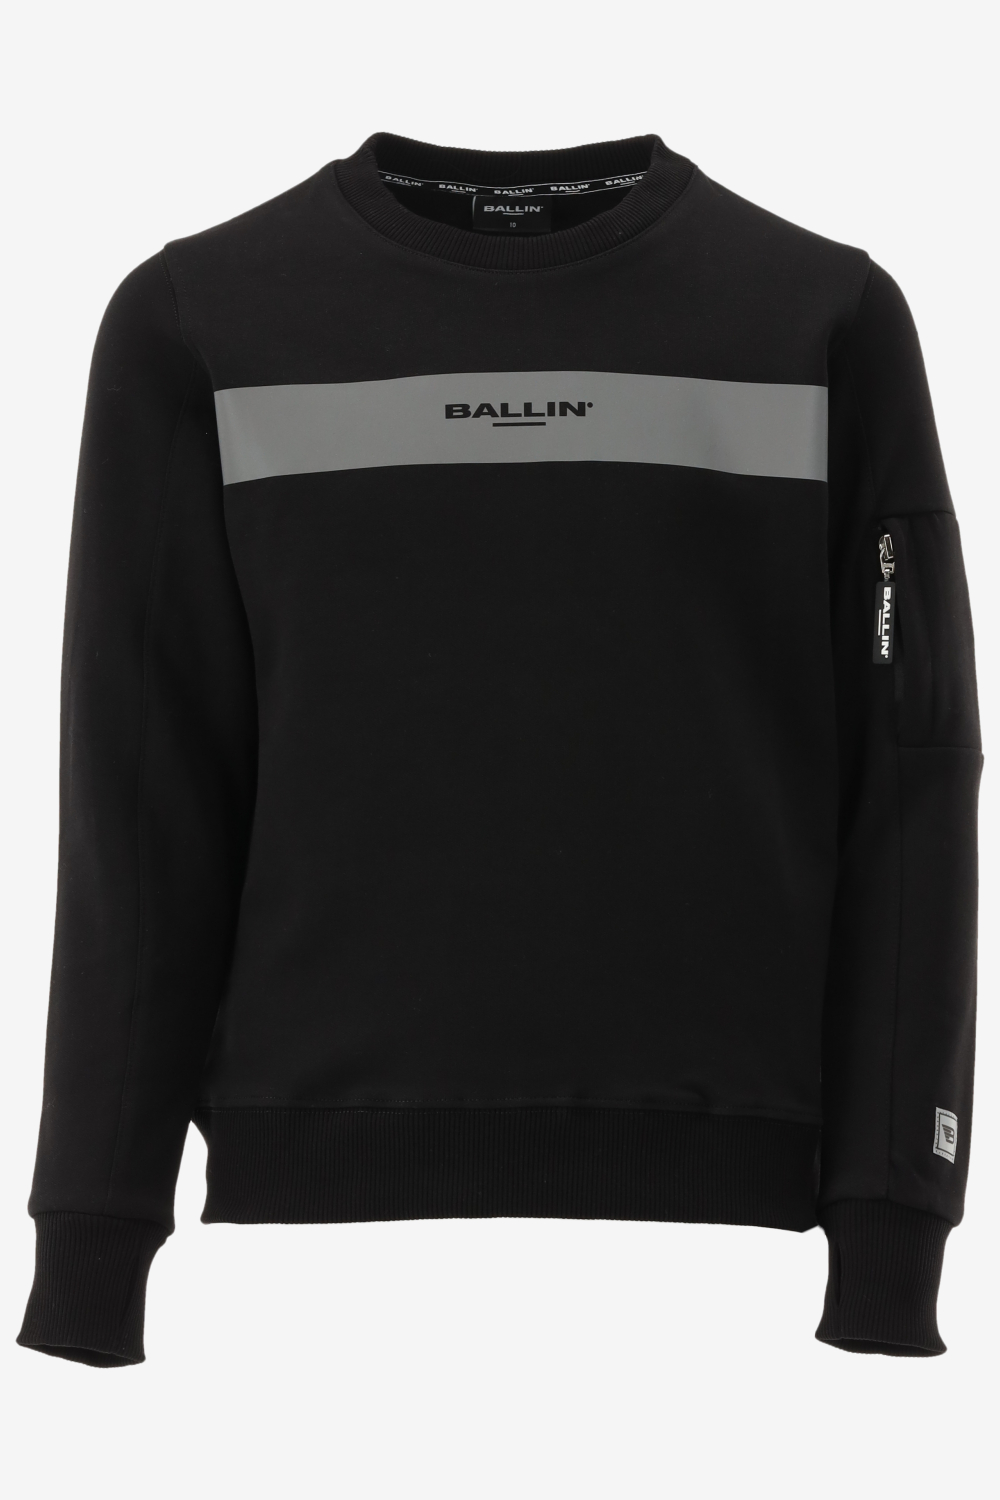 Ballin Amsterdam - Jongens Regular Fit Sweater - Zwart - Maat 152